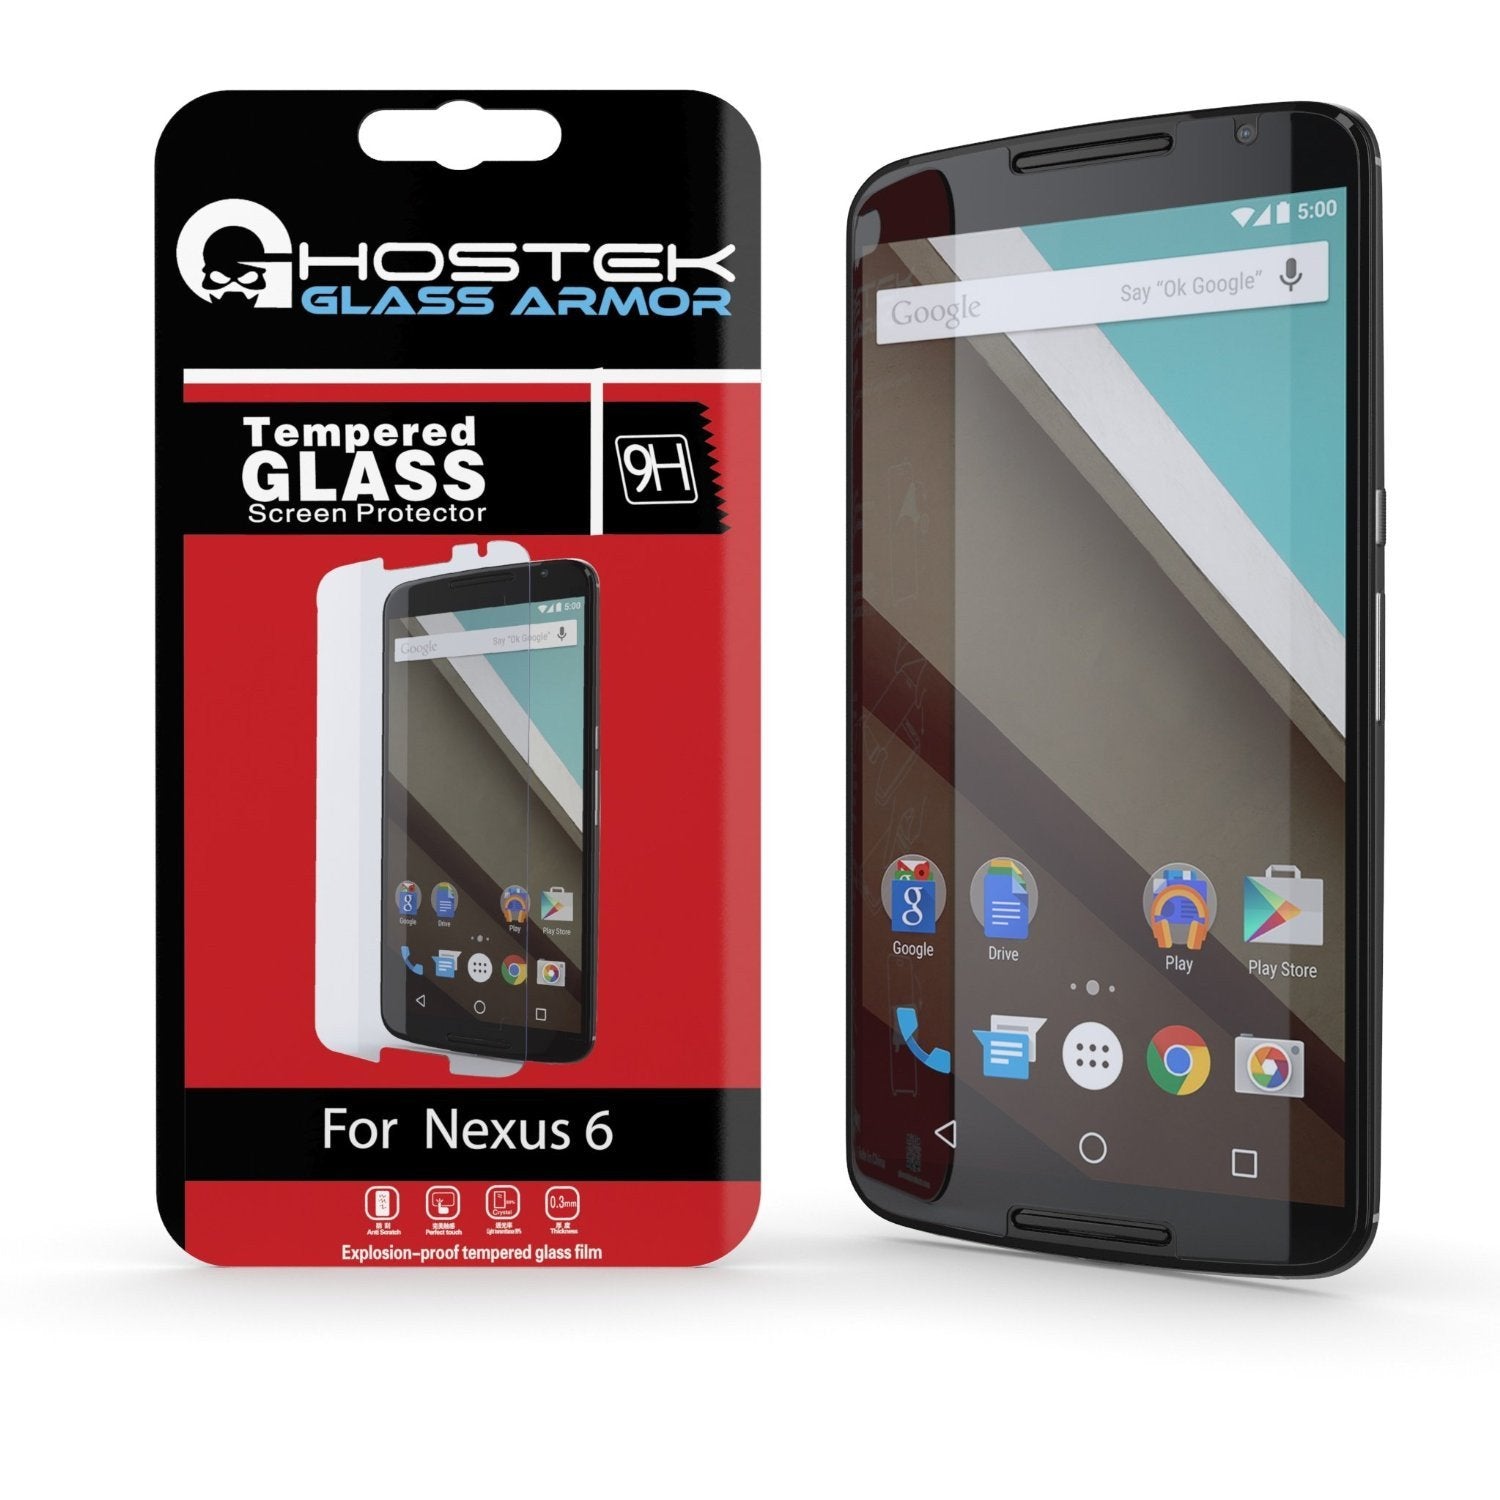 NEXUS 6 Screen Protector, Ghostek Glass Armor Tempered Glass Screen Protector 0.33mm Thick 9H Glass